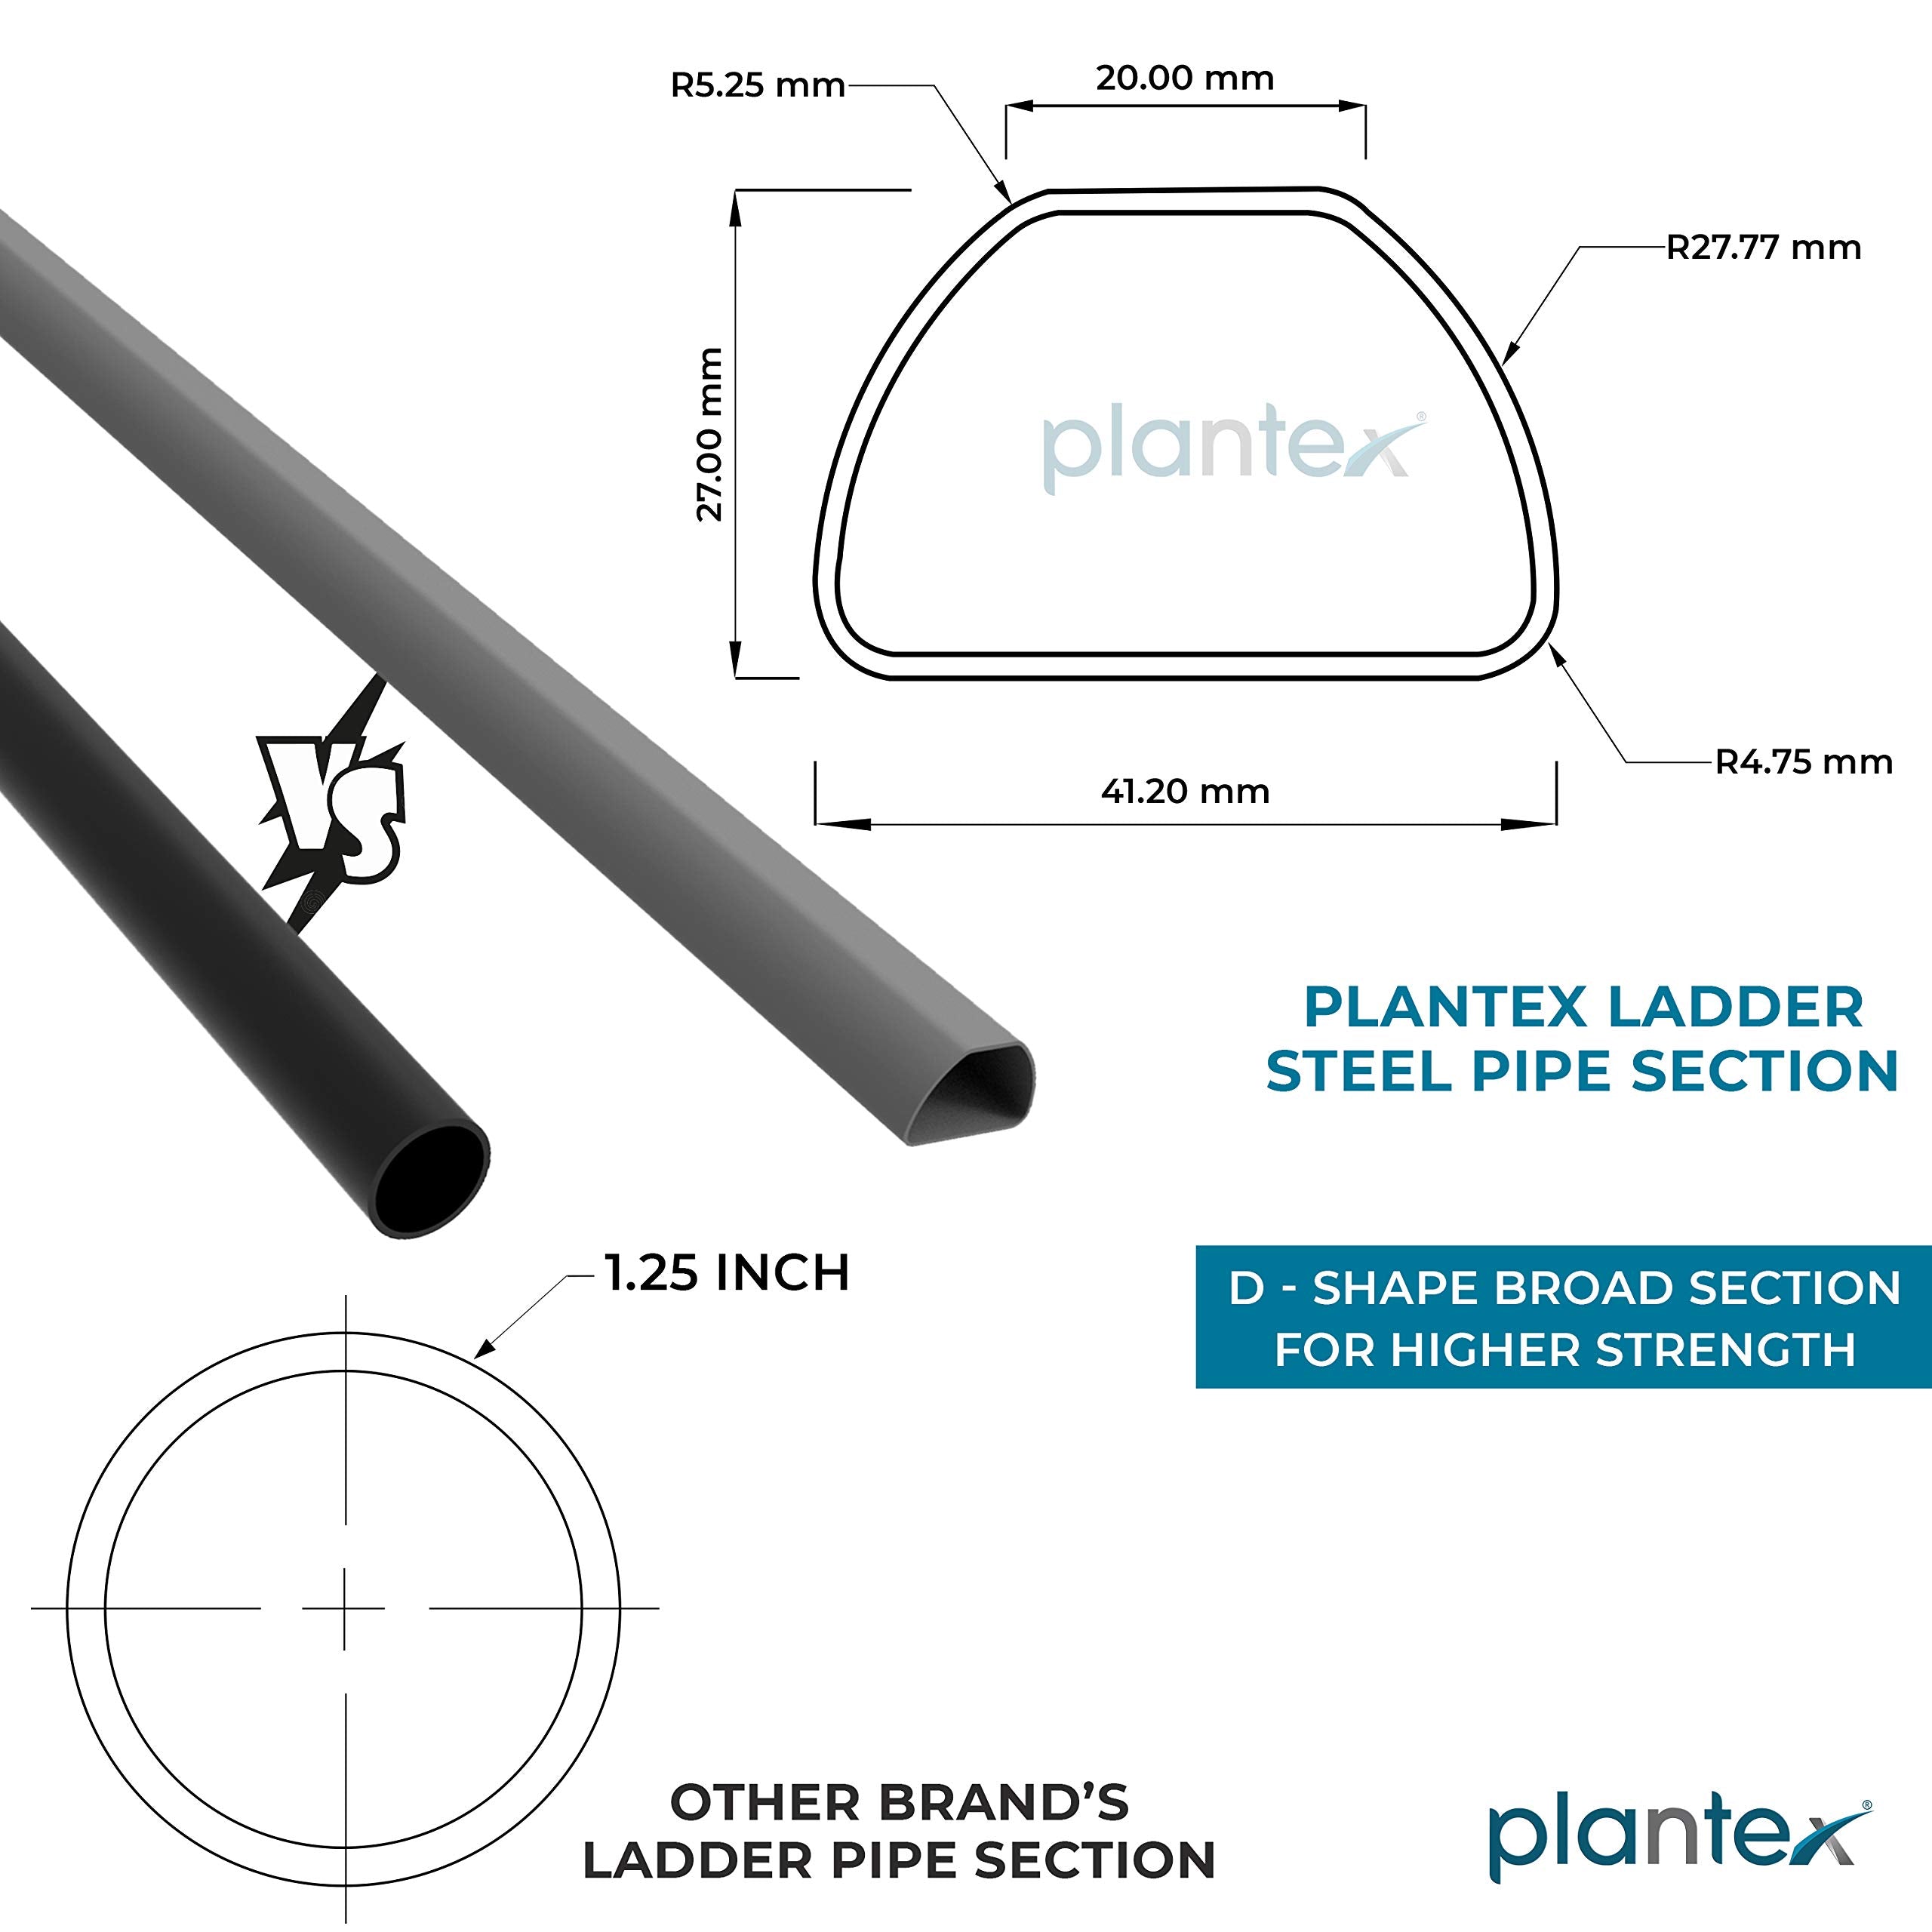 Plantex Ladder for Home-Foldable Steel 3 Step Ladder-Wide Anti Skid Steps (Gray & White)